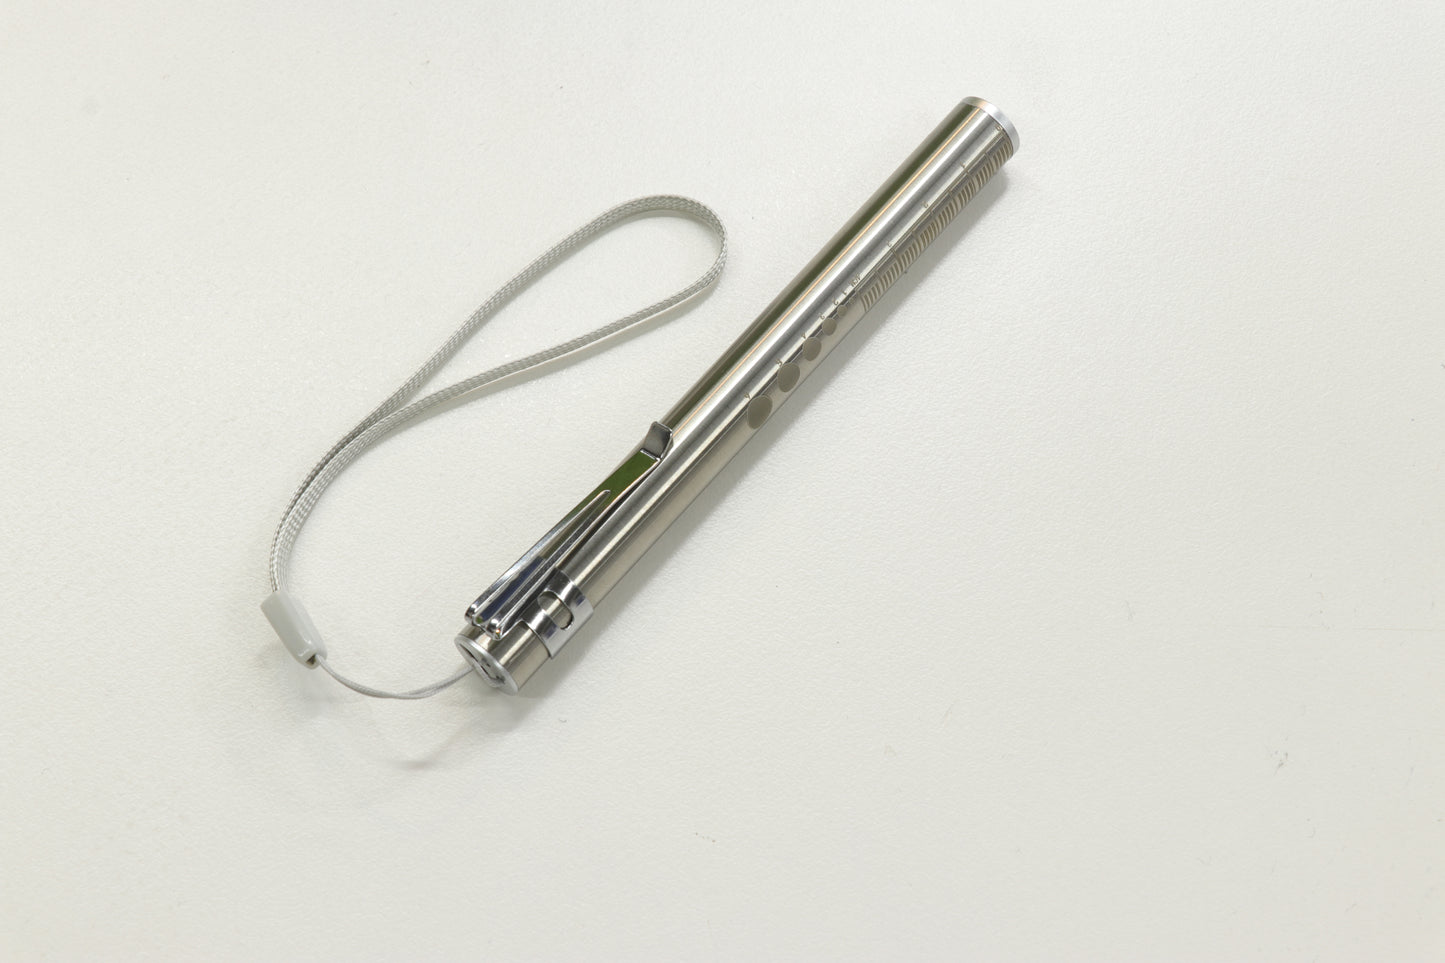 NSPENCM Super Small Mini Pen Light AAA 100 Lumens